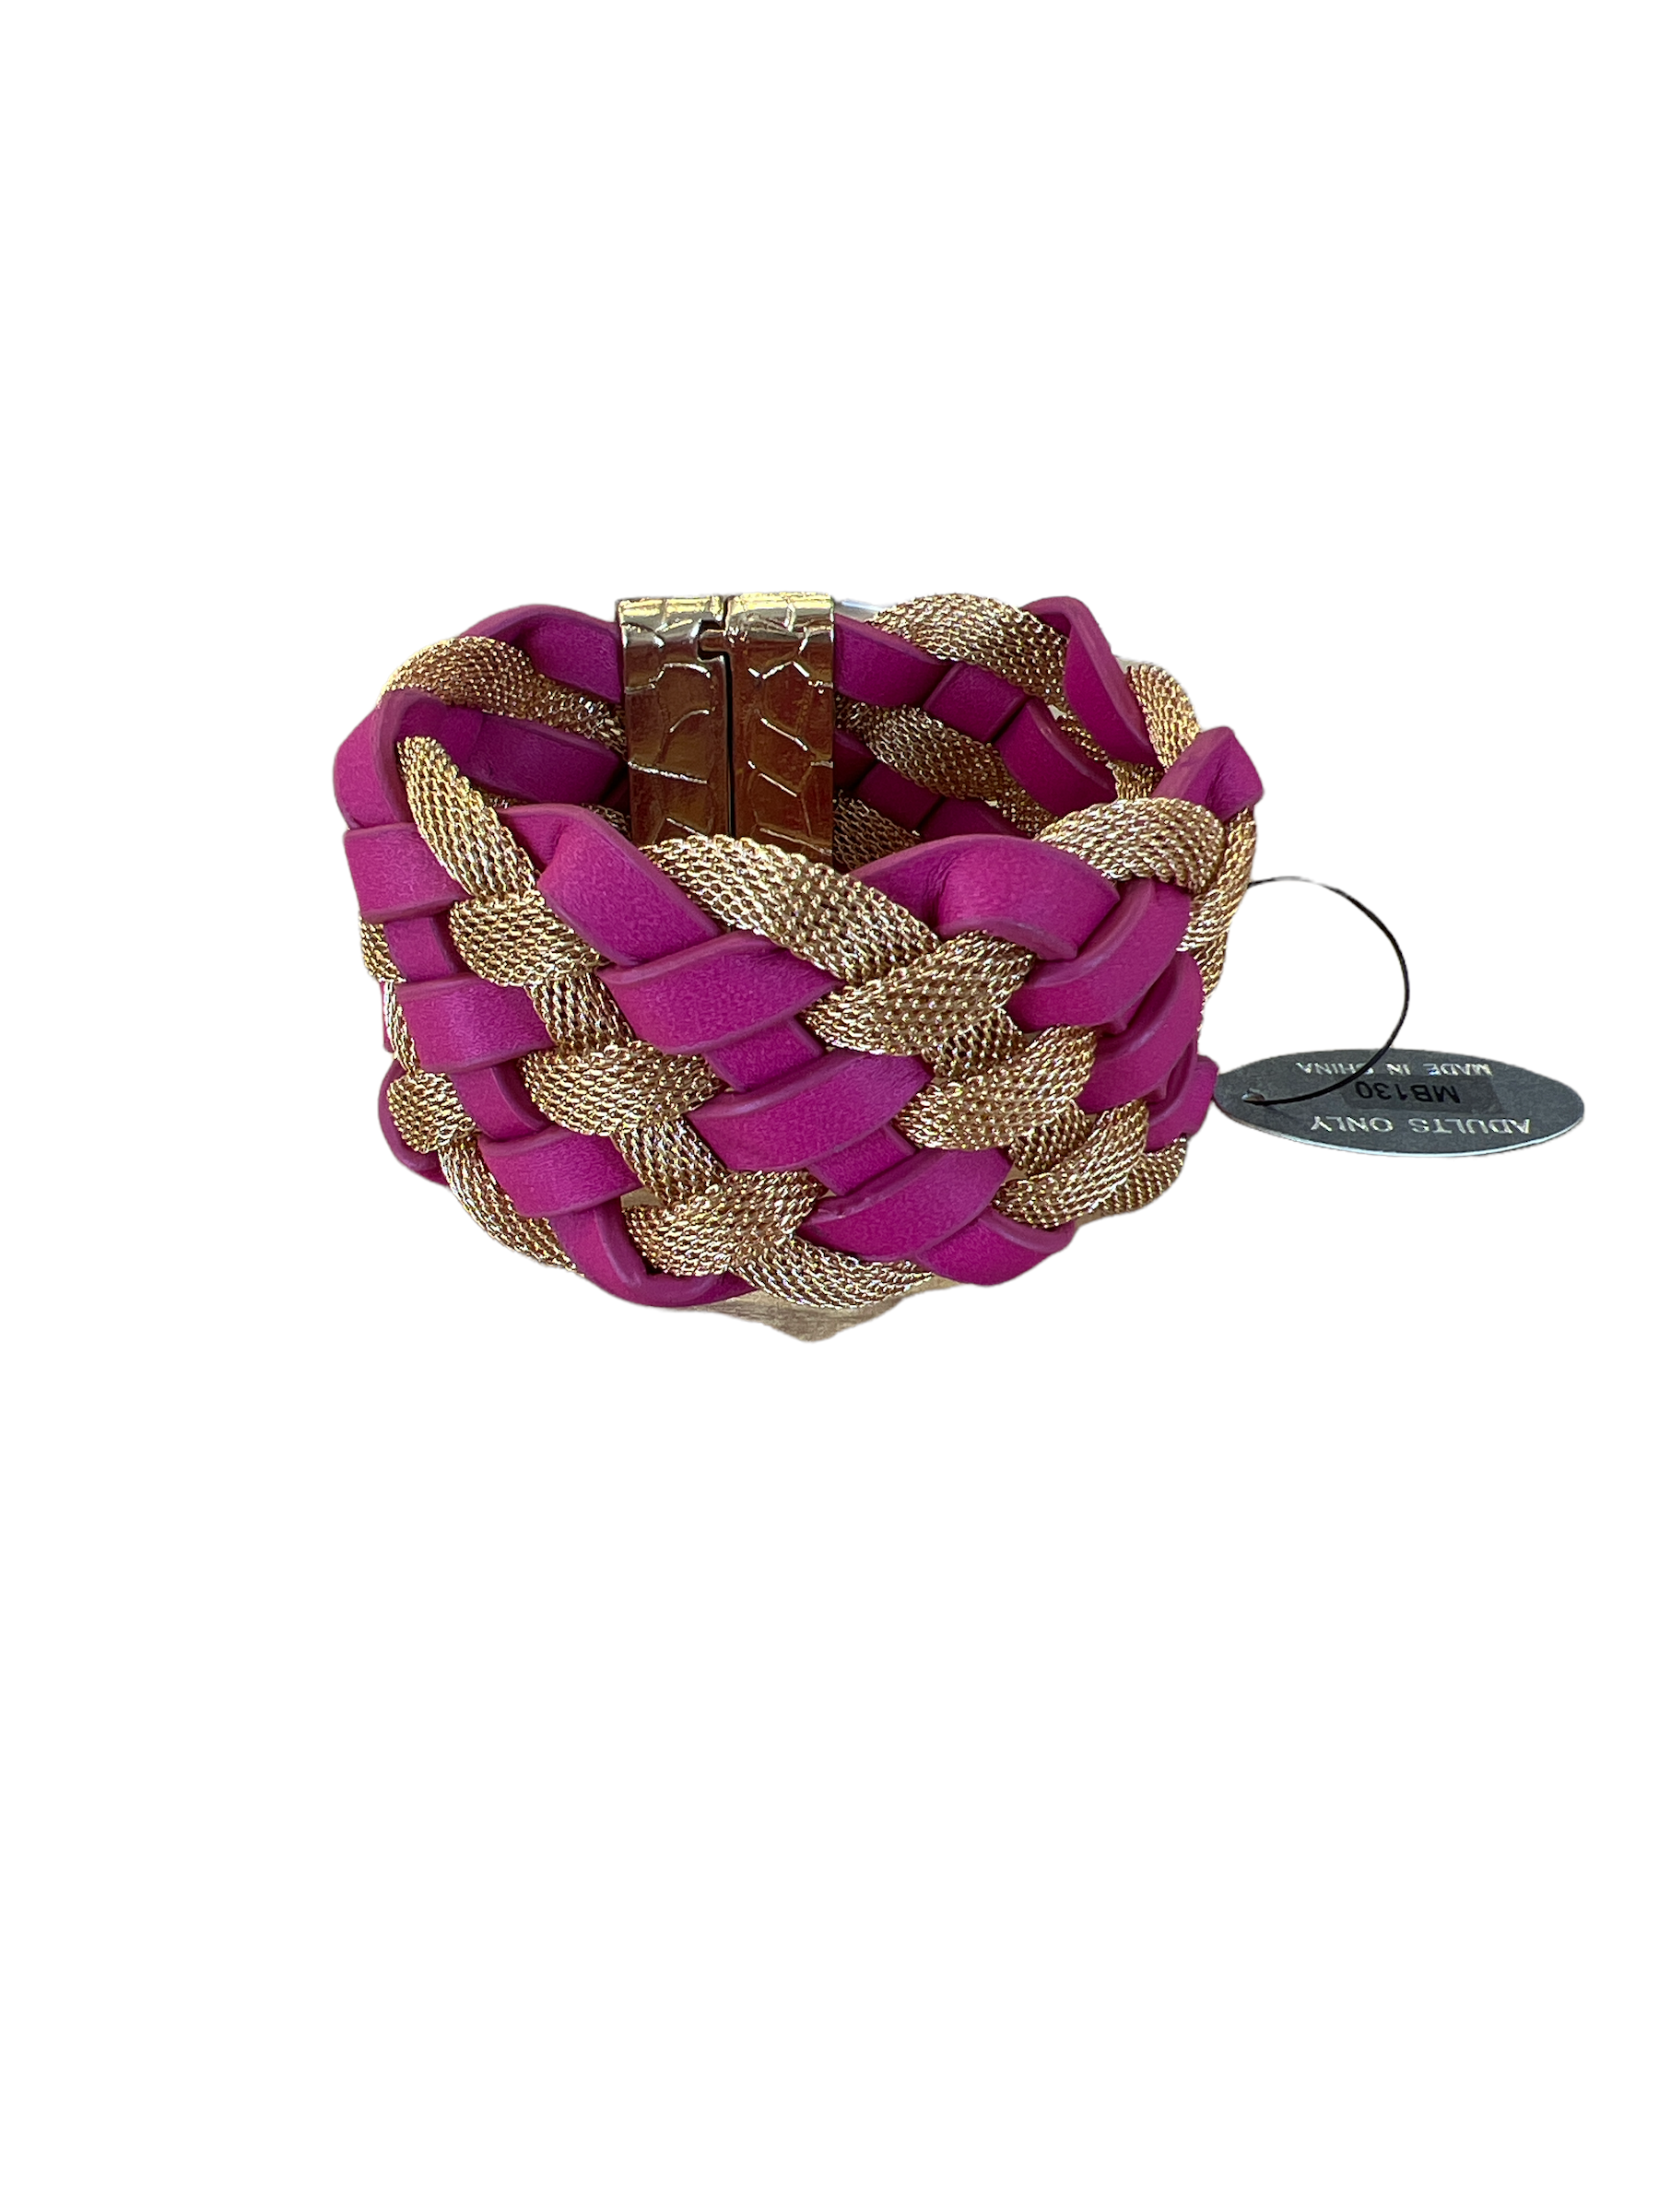 Jamie Braided Magnetic Bracelet-410 Jewelry-Simply Stylish Boutique-Simply Stylish Boutique | Women’s & Kid’s Fashion | Paducah, KY